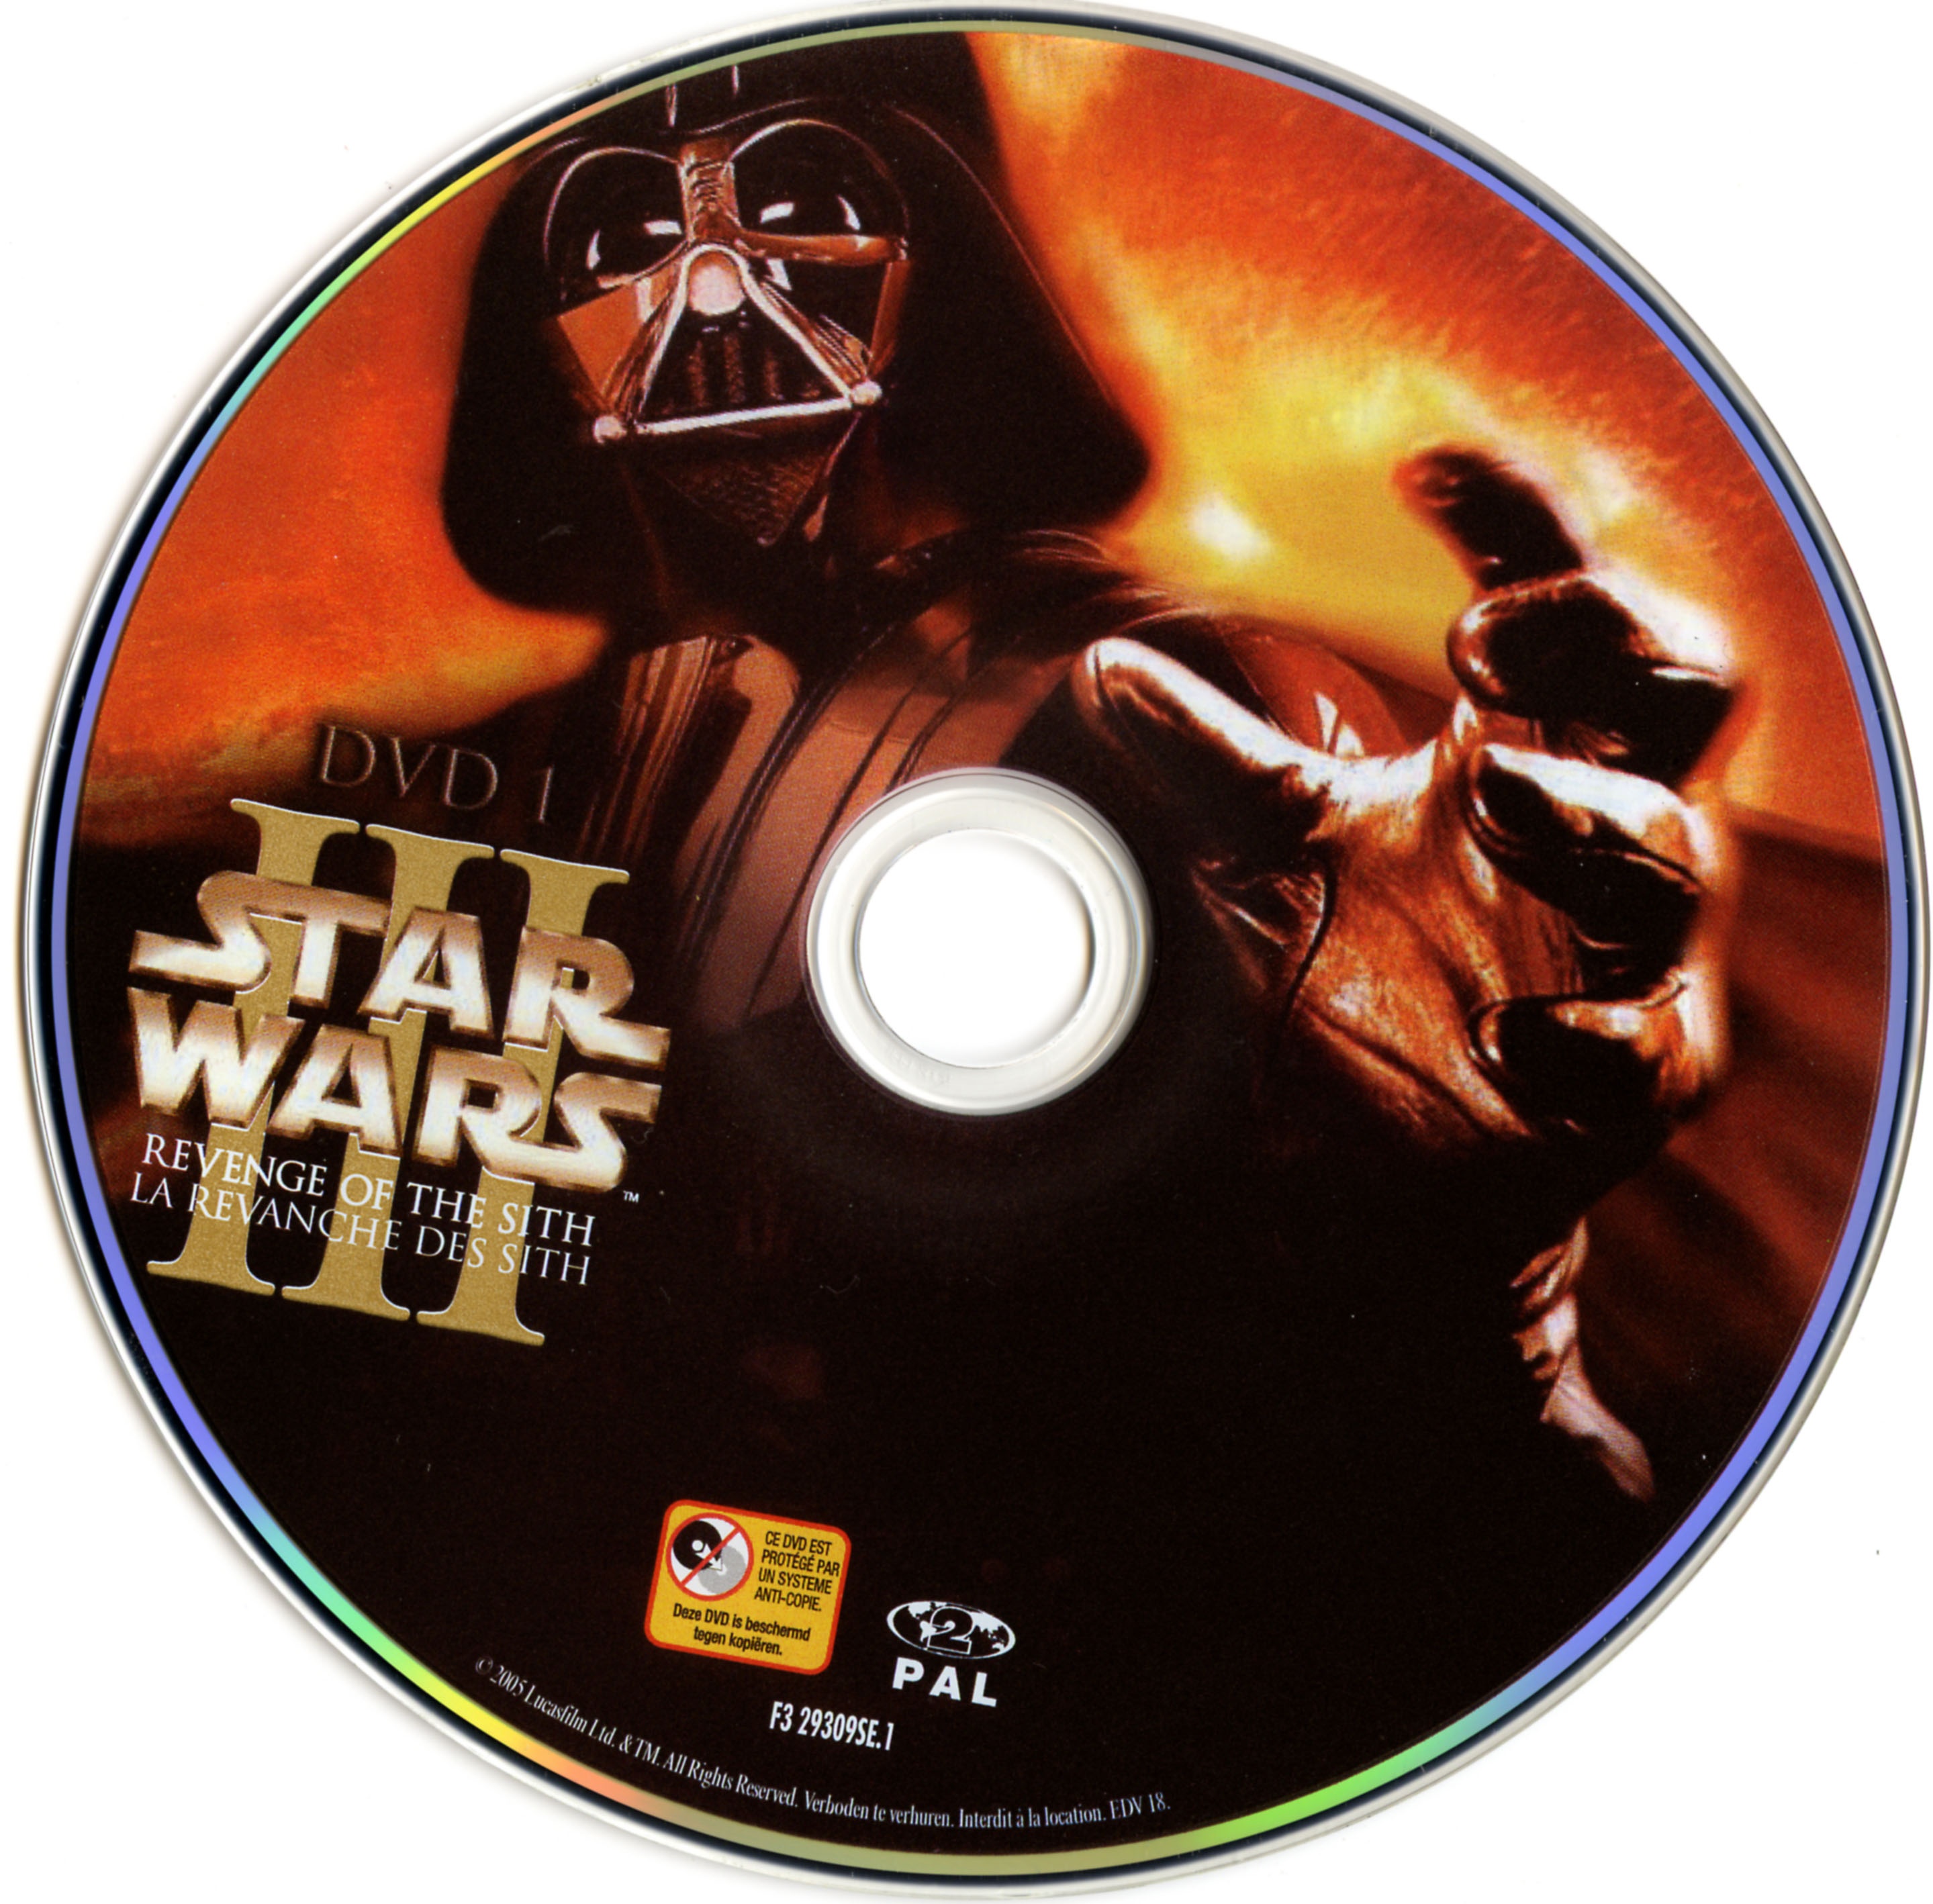 Star wars la revanche des Sith DISC 1